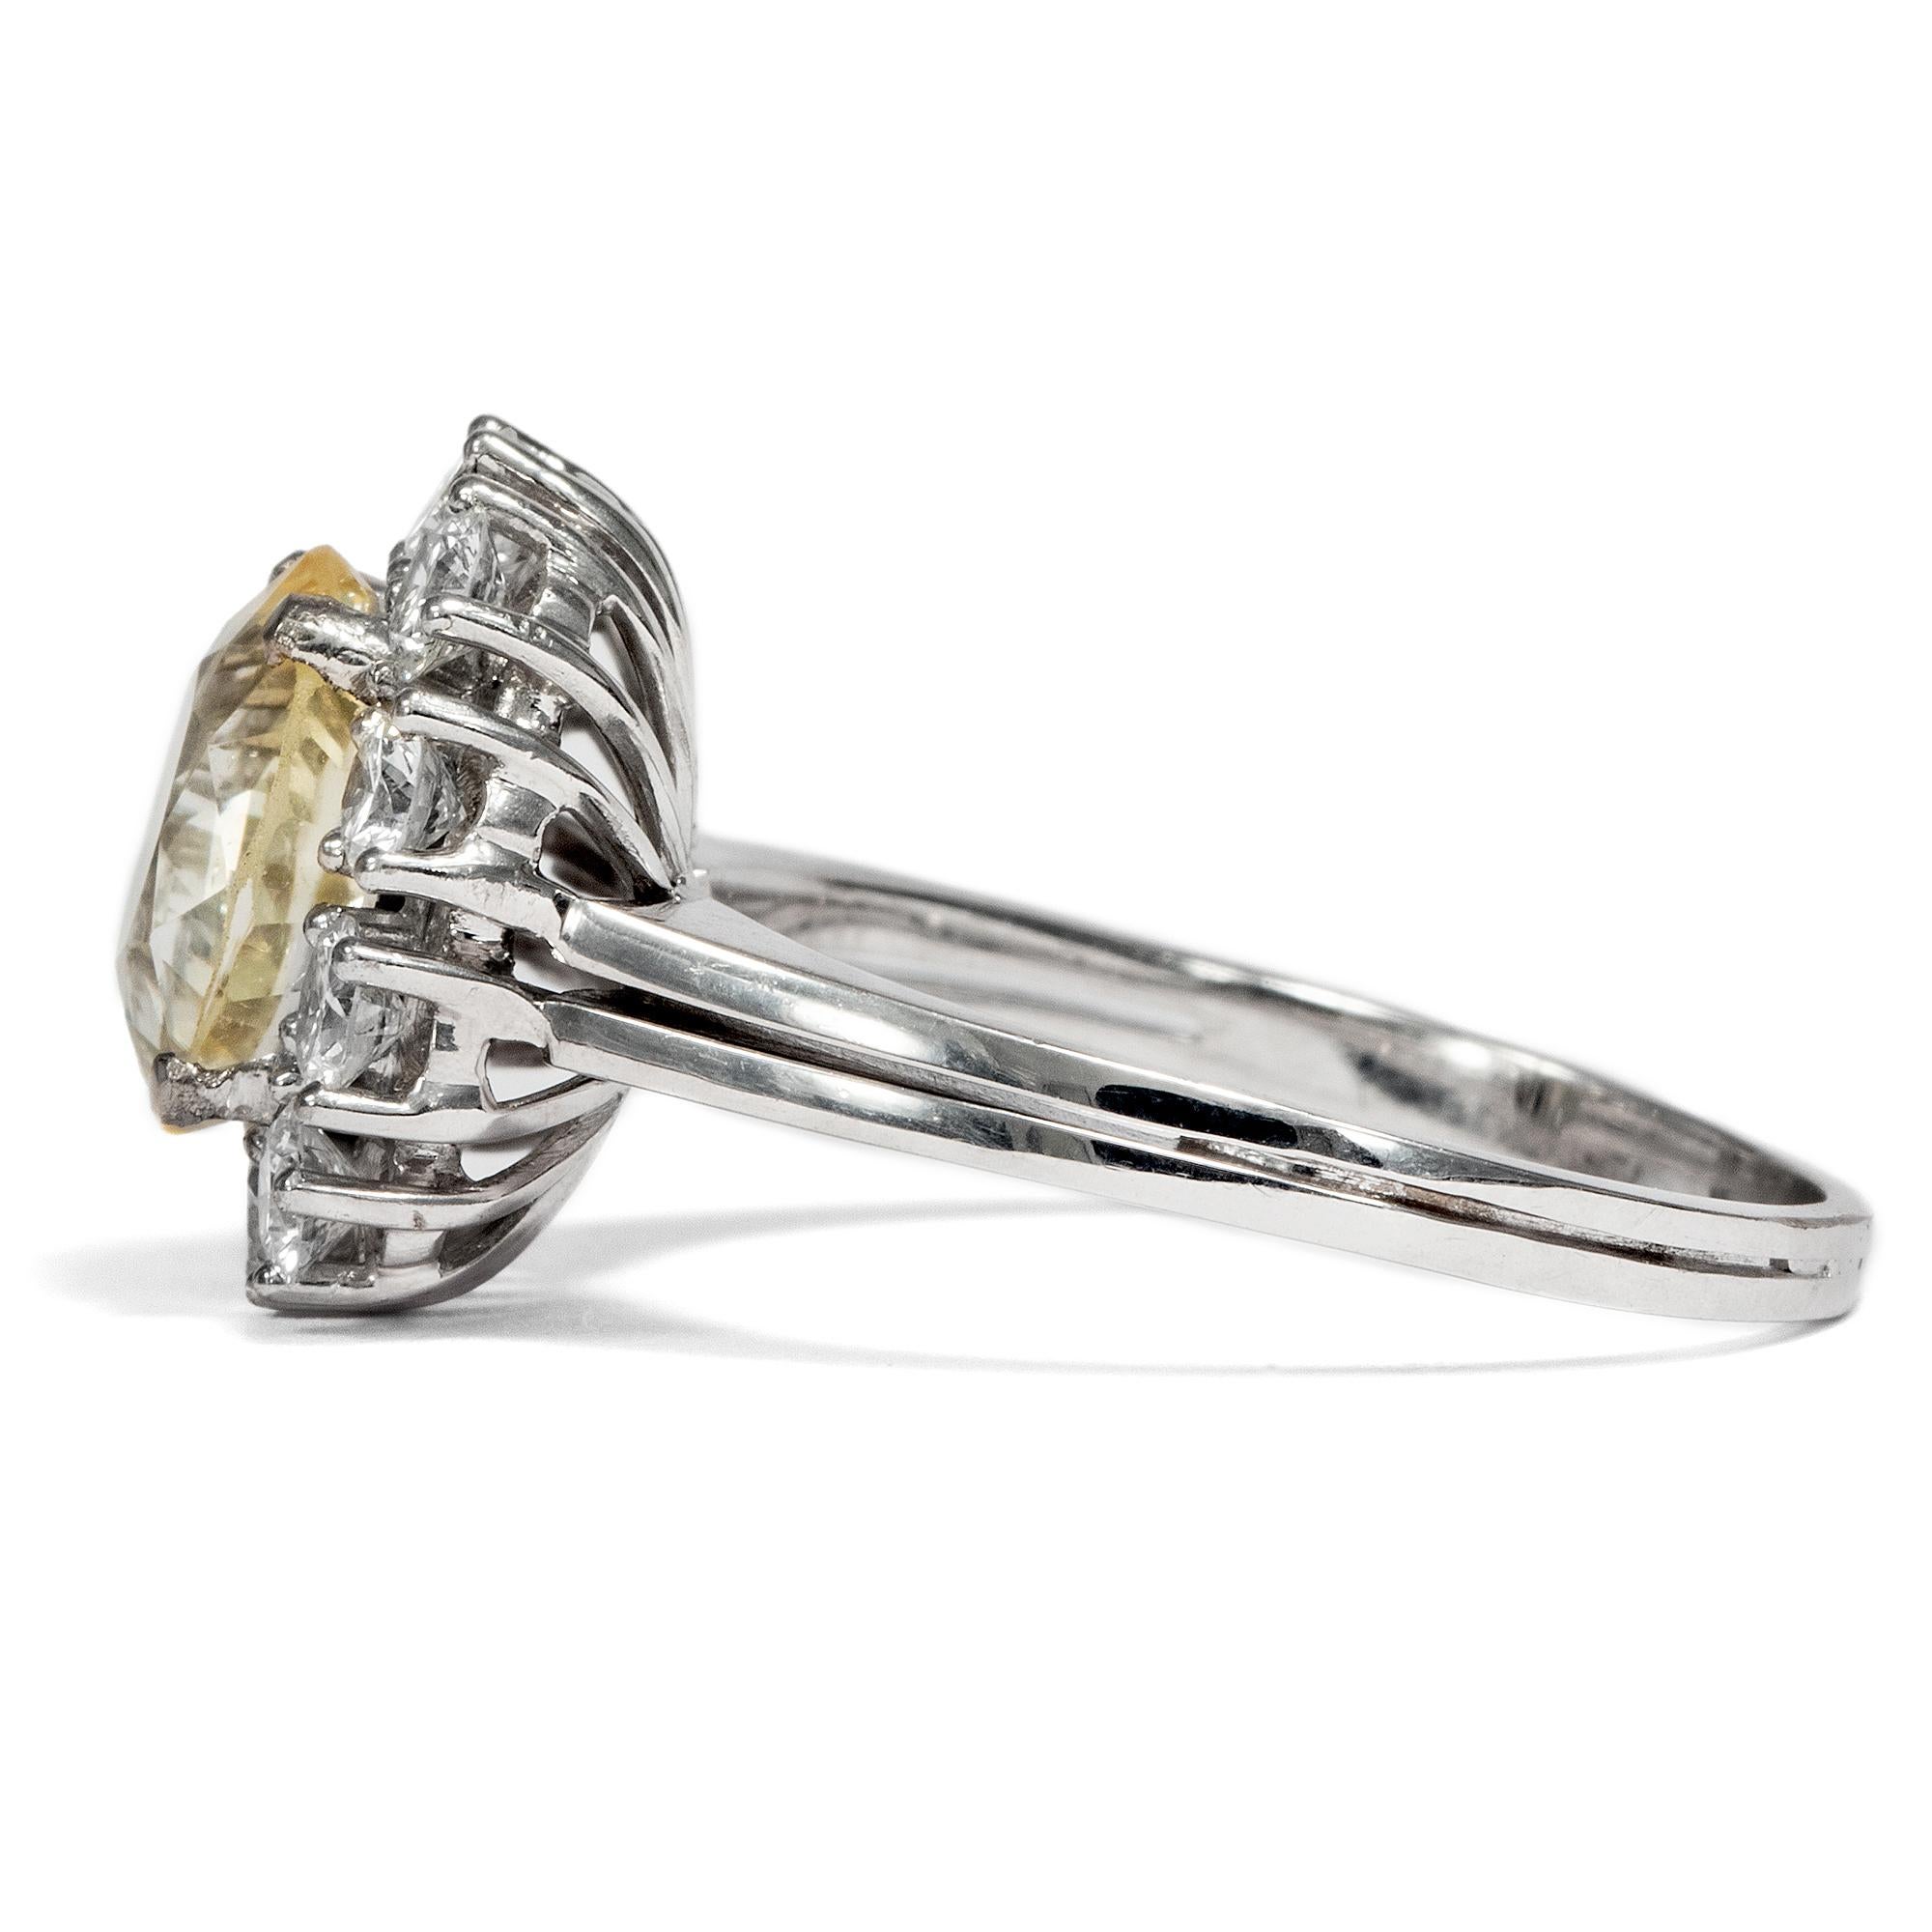 3.8 carat diamond ring